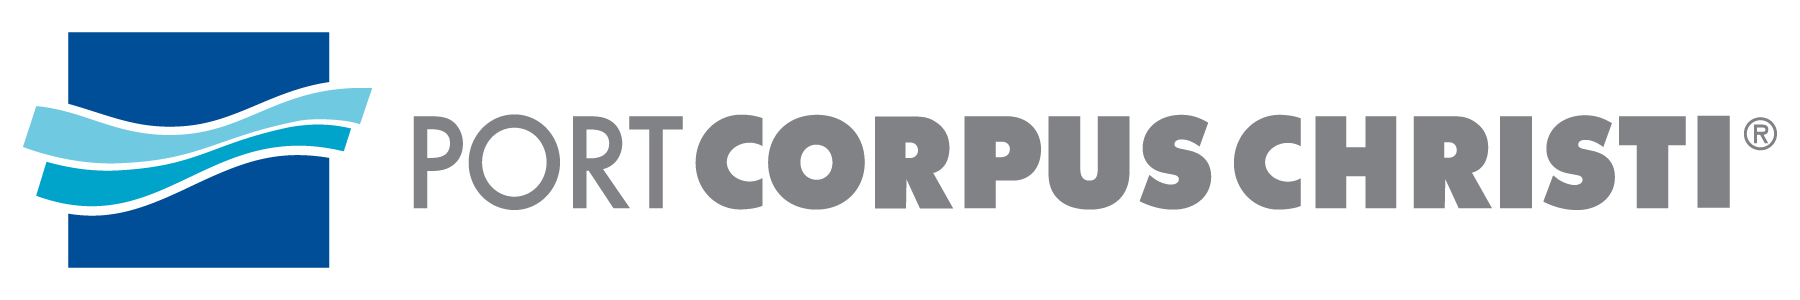 Port of Corpus Christi Logo